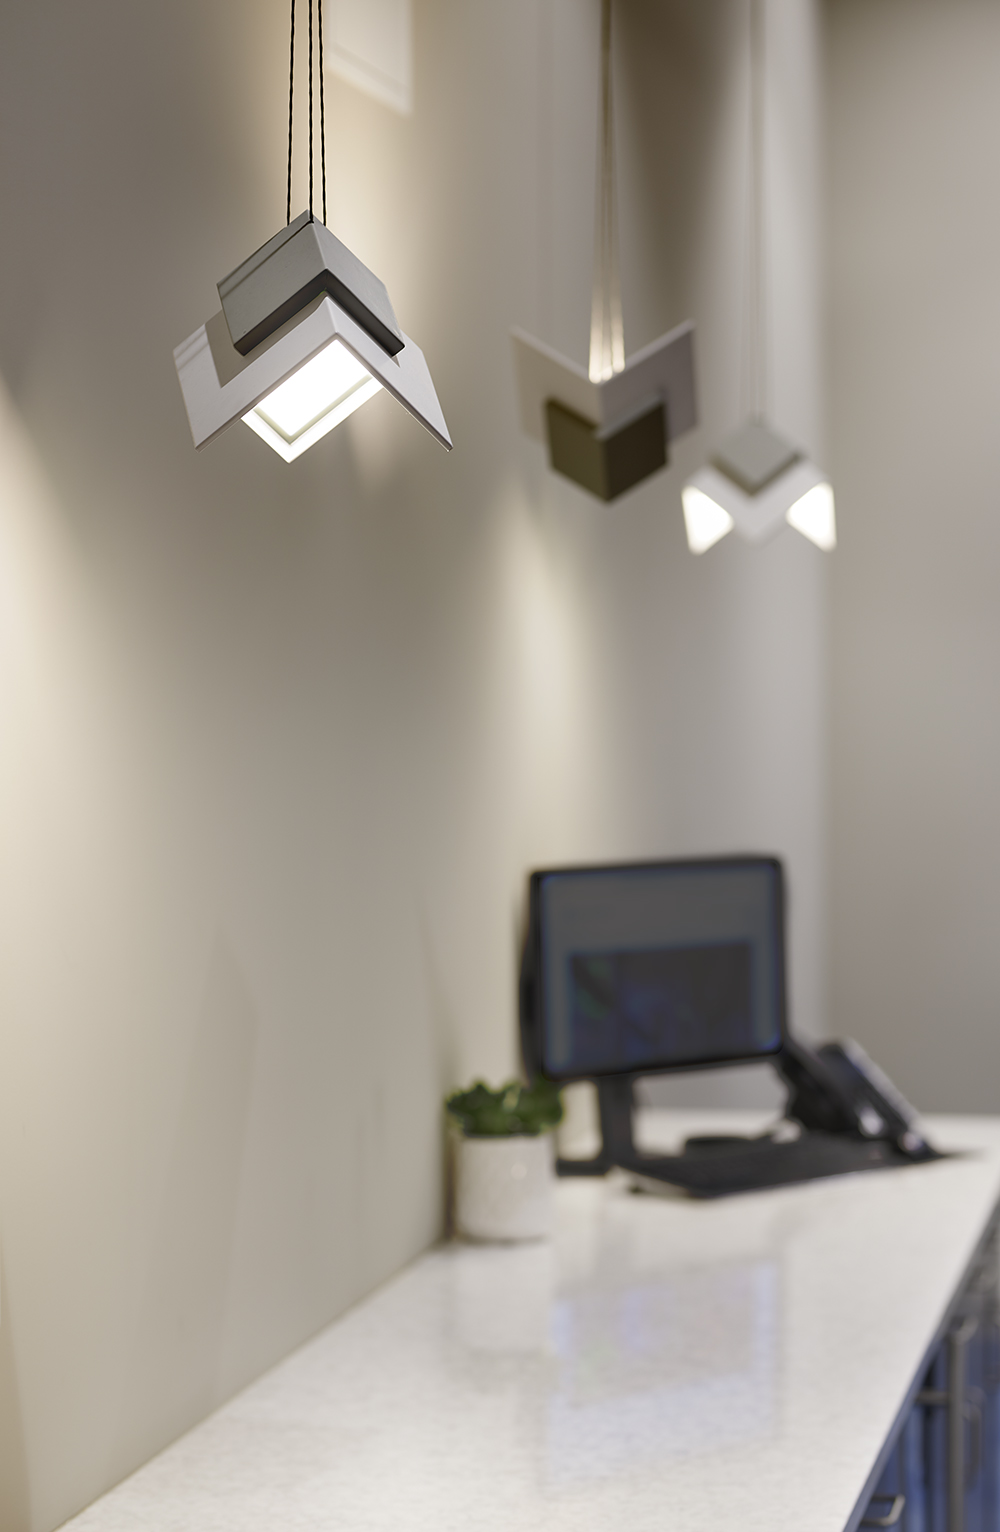 Petal OLED pendants as office lighting fixtures along a meeting room wall.